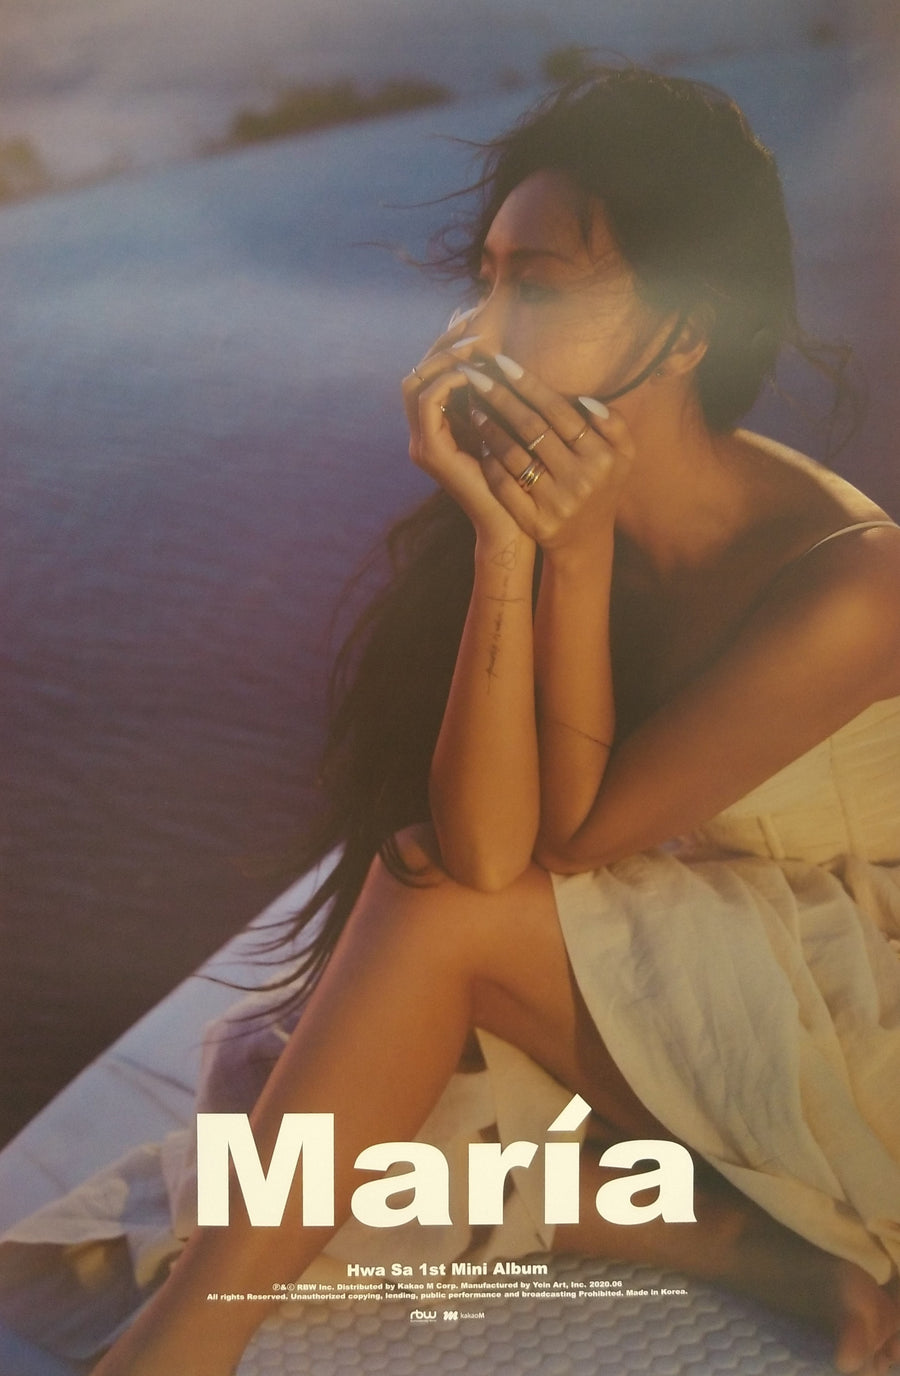 HWASA 1st Mini Album MARIA Official Poster - Photo Concept 2